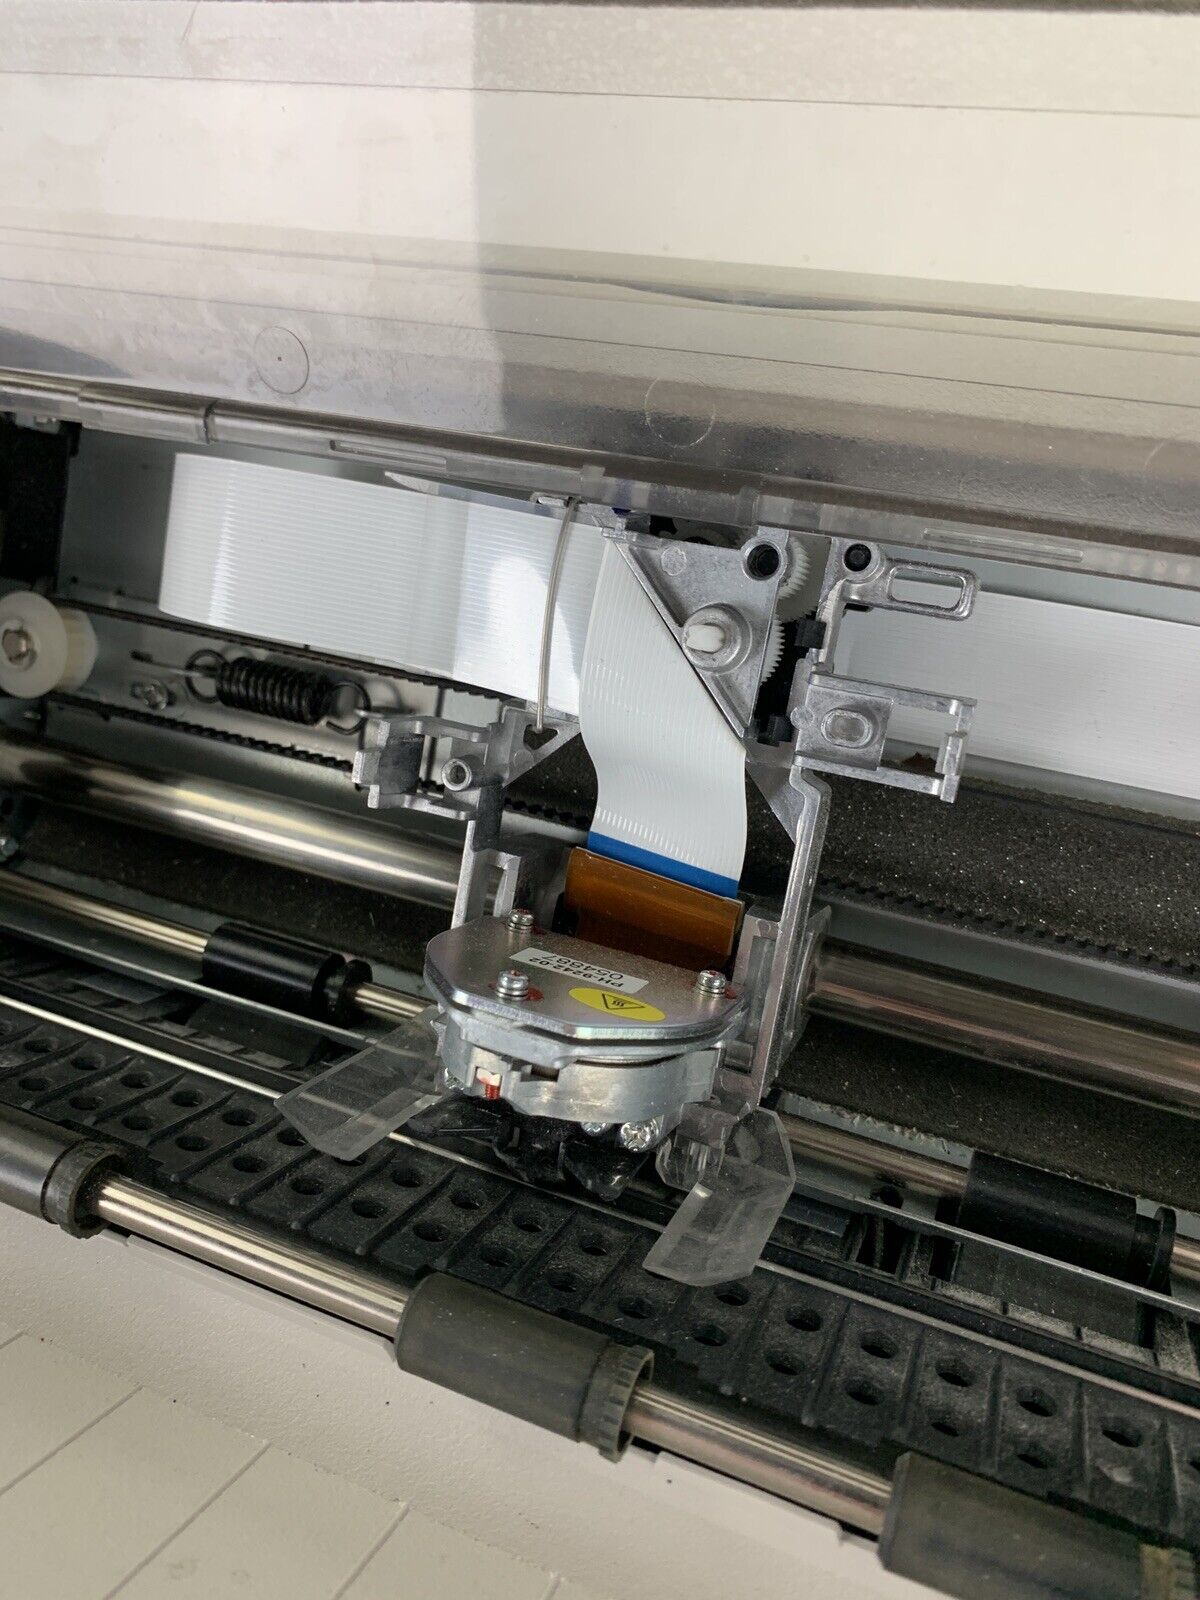 Lexmark Forms Printer 2580 Series 2580-500 Dot Matrix Printer Tested